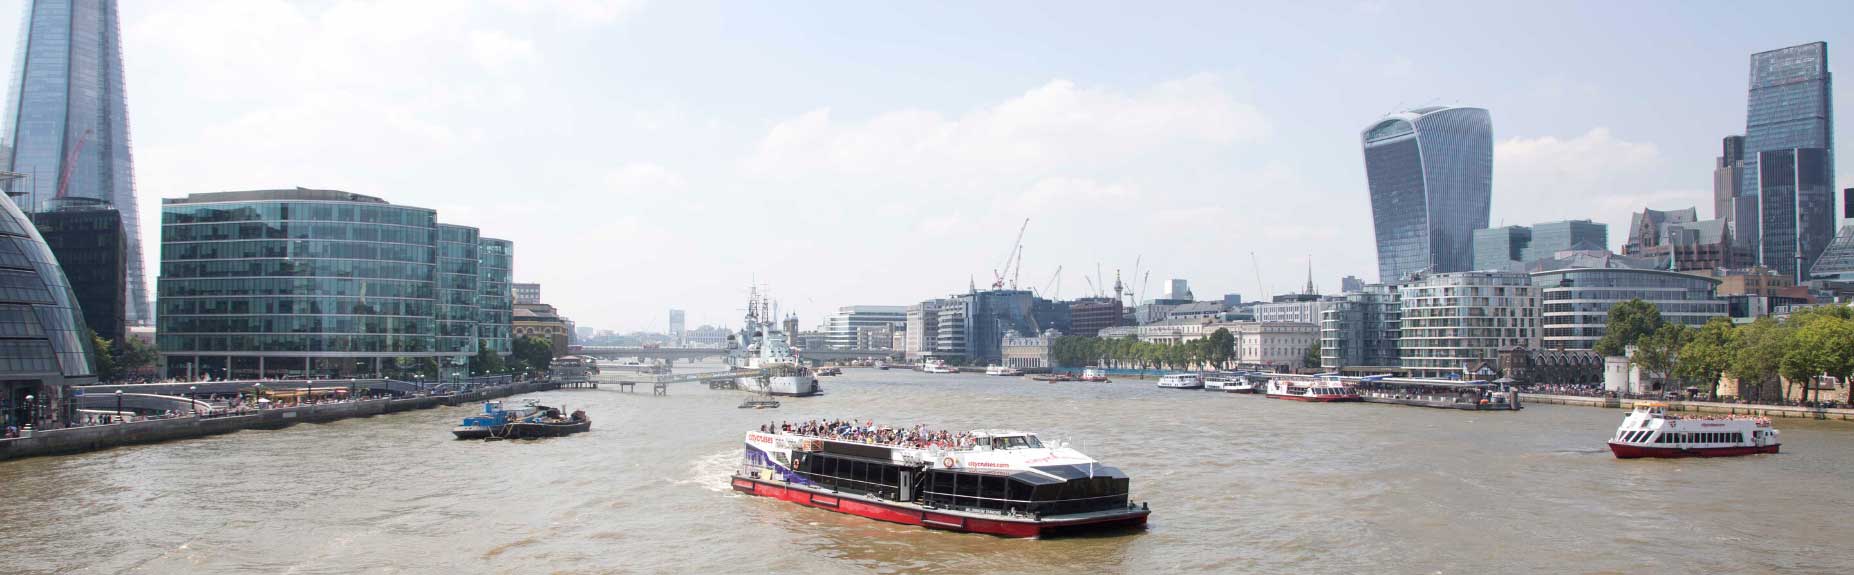 Два катера City Cruise на реке Темзе по обе стороны от города